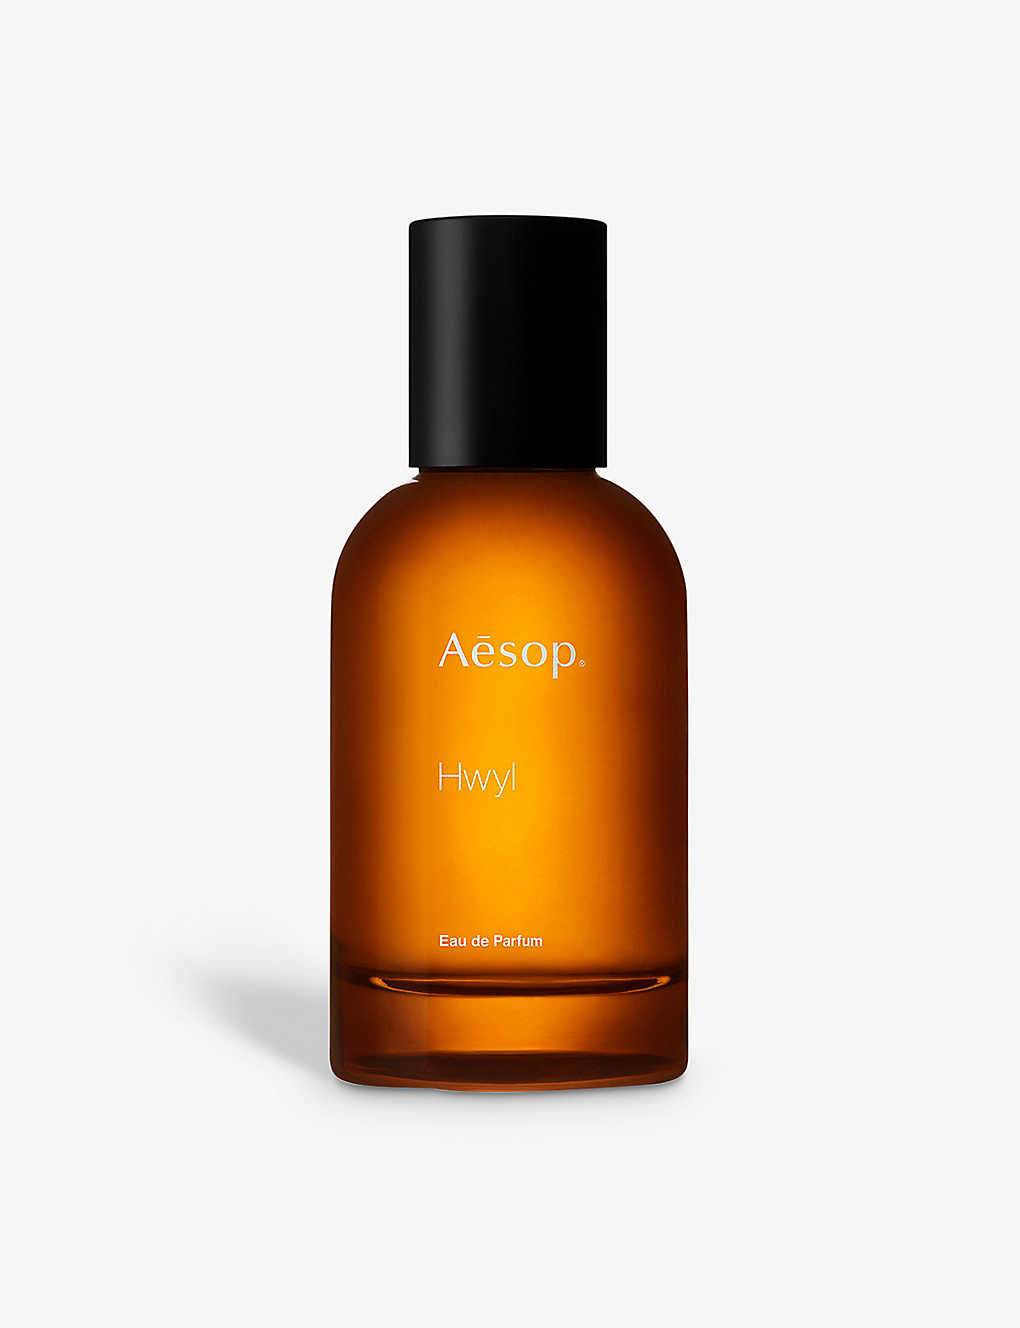 AESOP Hwyl eau de parfum 50ml